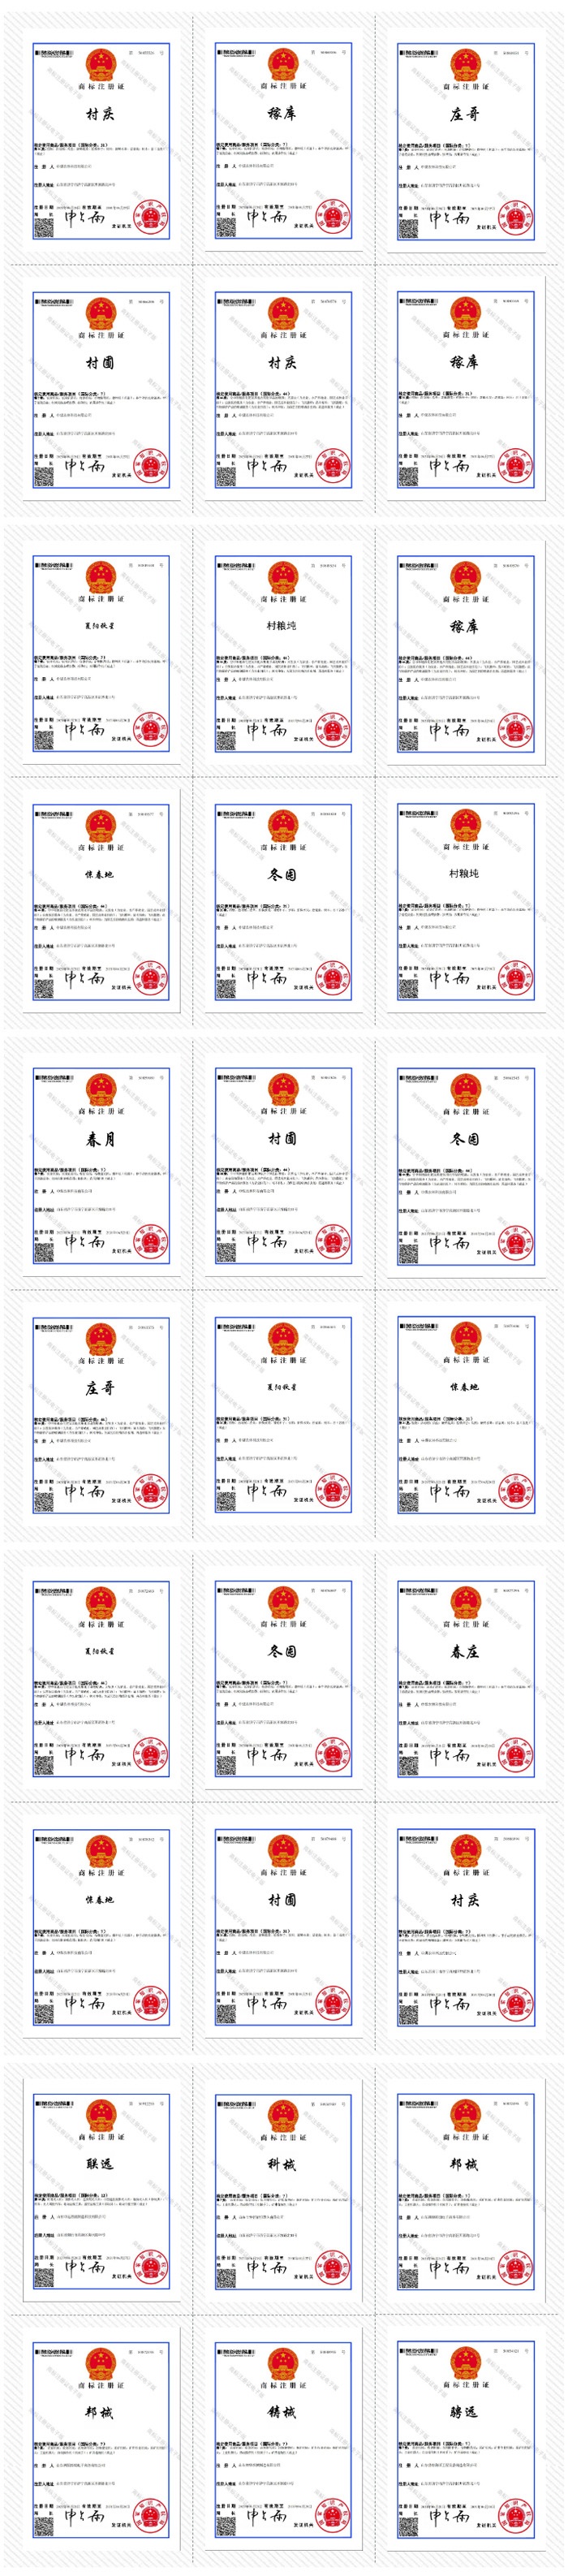 Congratulations To Shandong Lvbei For Obtaining 30 National Trademark Registration Certificates